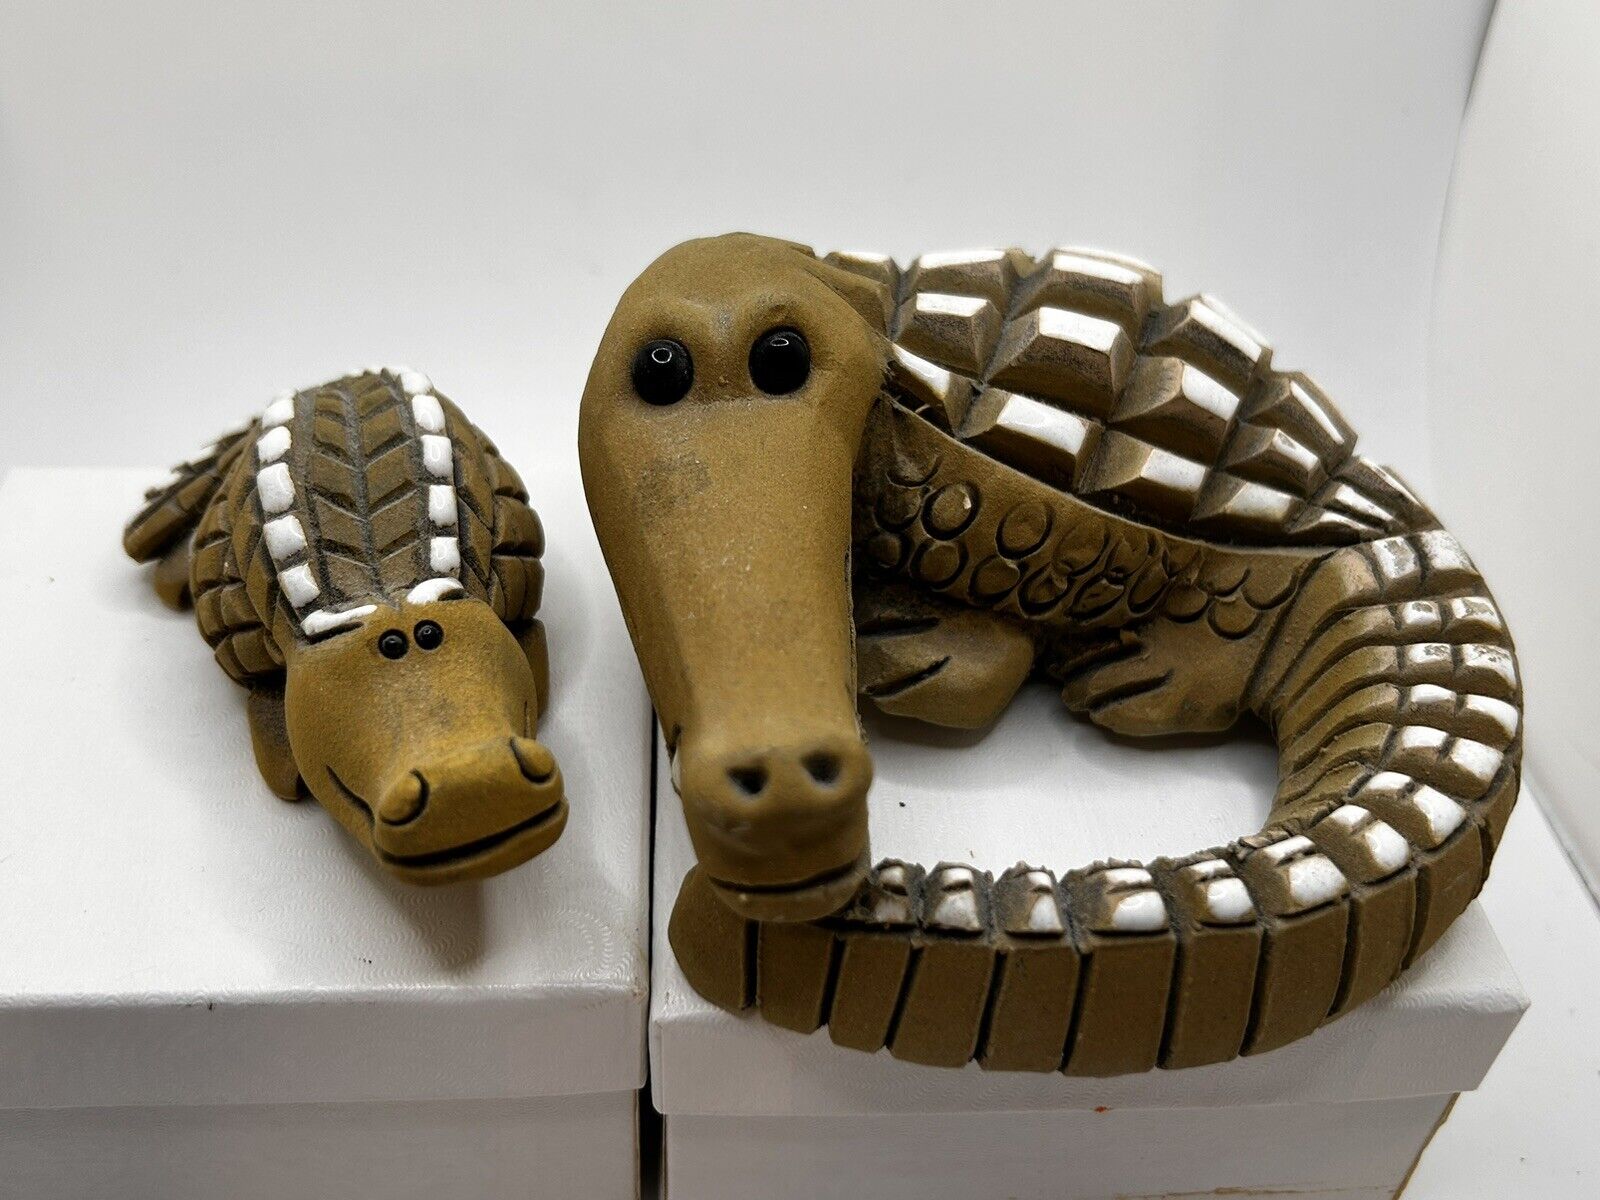 2 Artesania Rinconada Alligator Crocodile Figurines Retired Art Pottery Uruguay